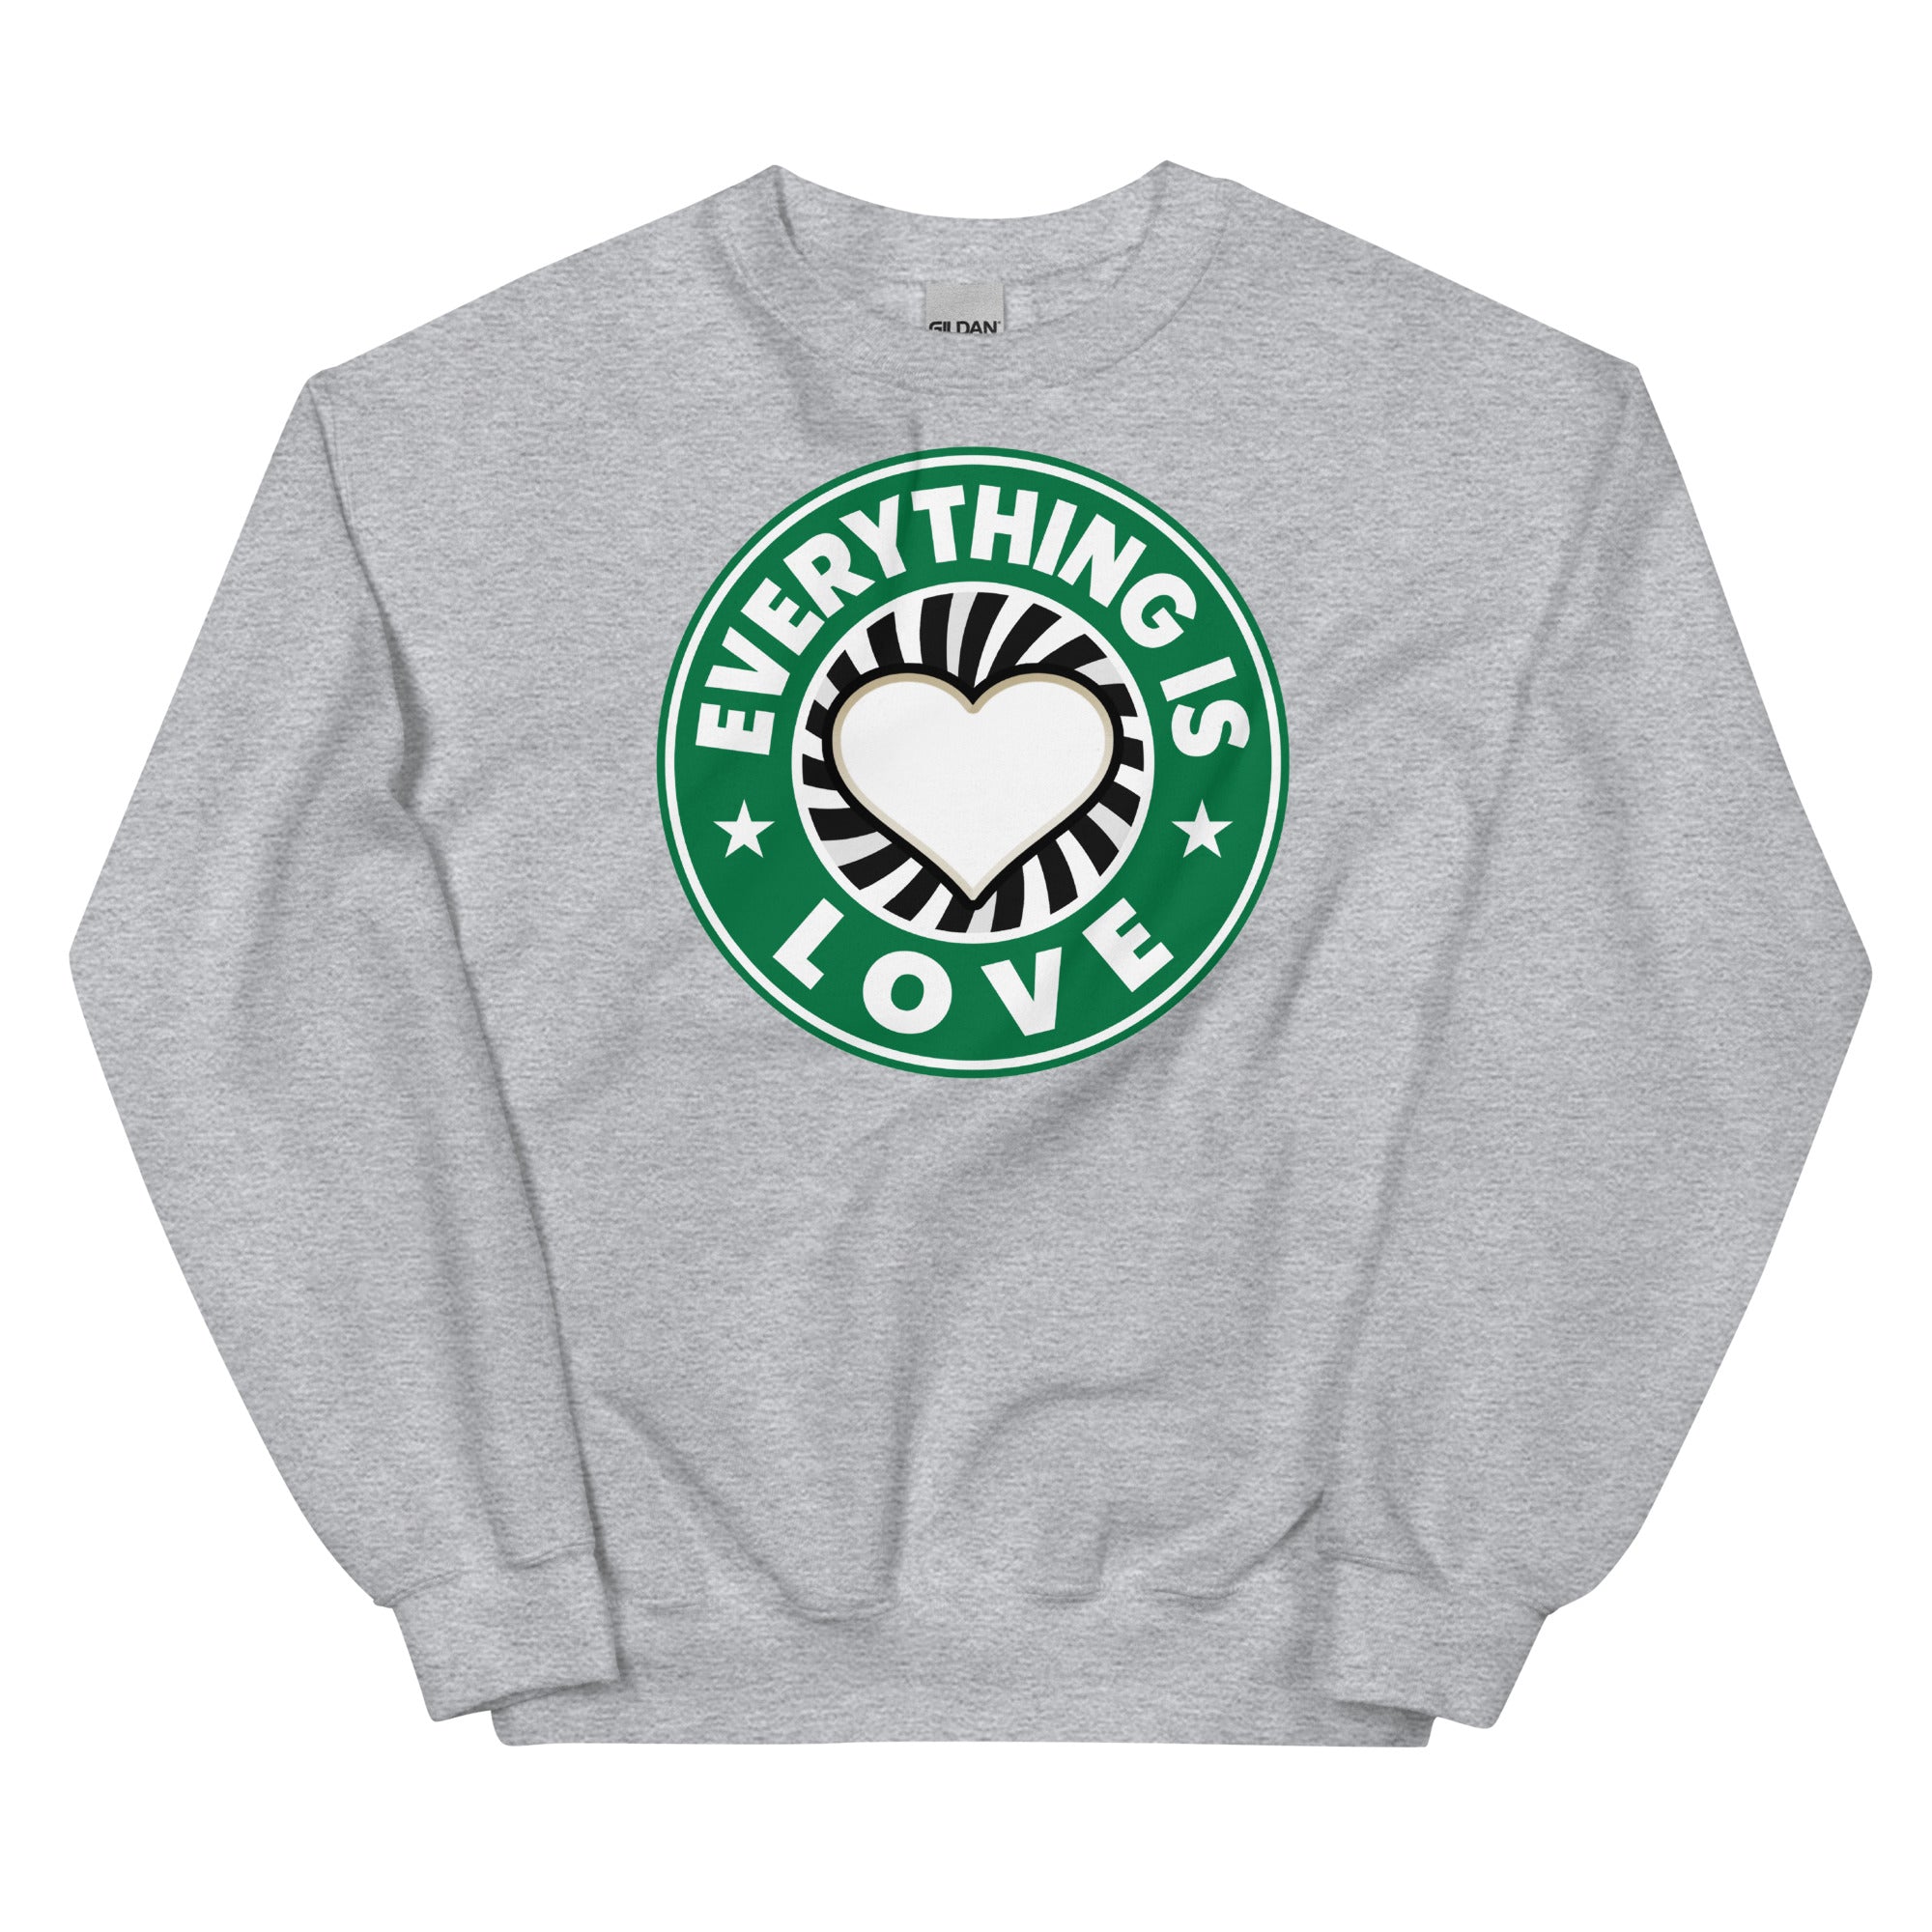 EVERYTHING IS LOVE Sweatshirt - Beats 4 Hope